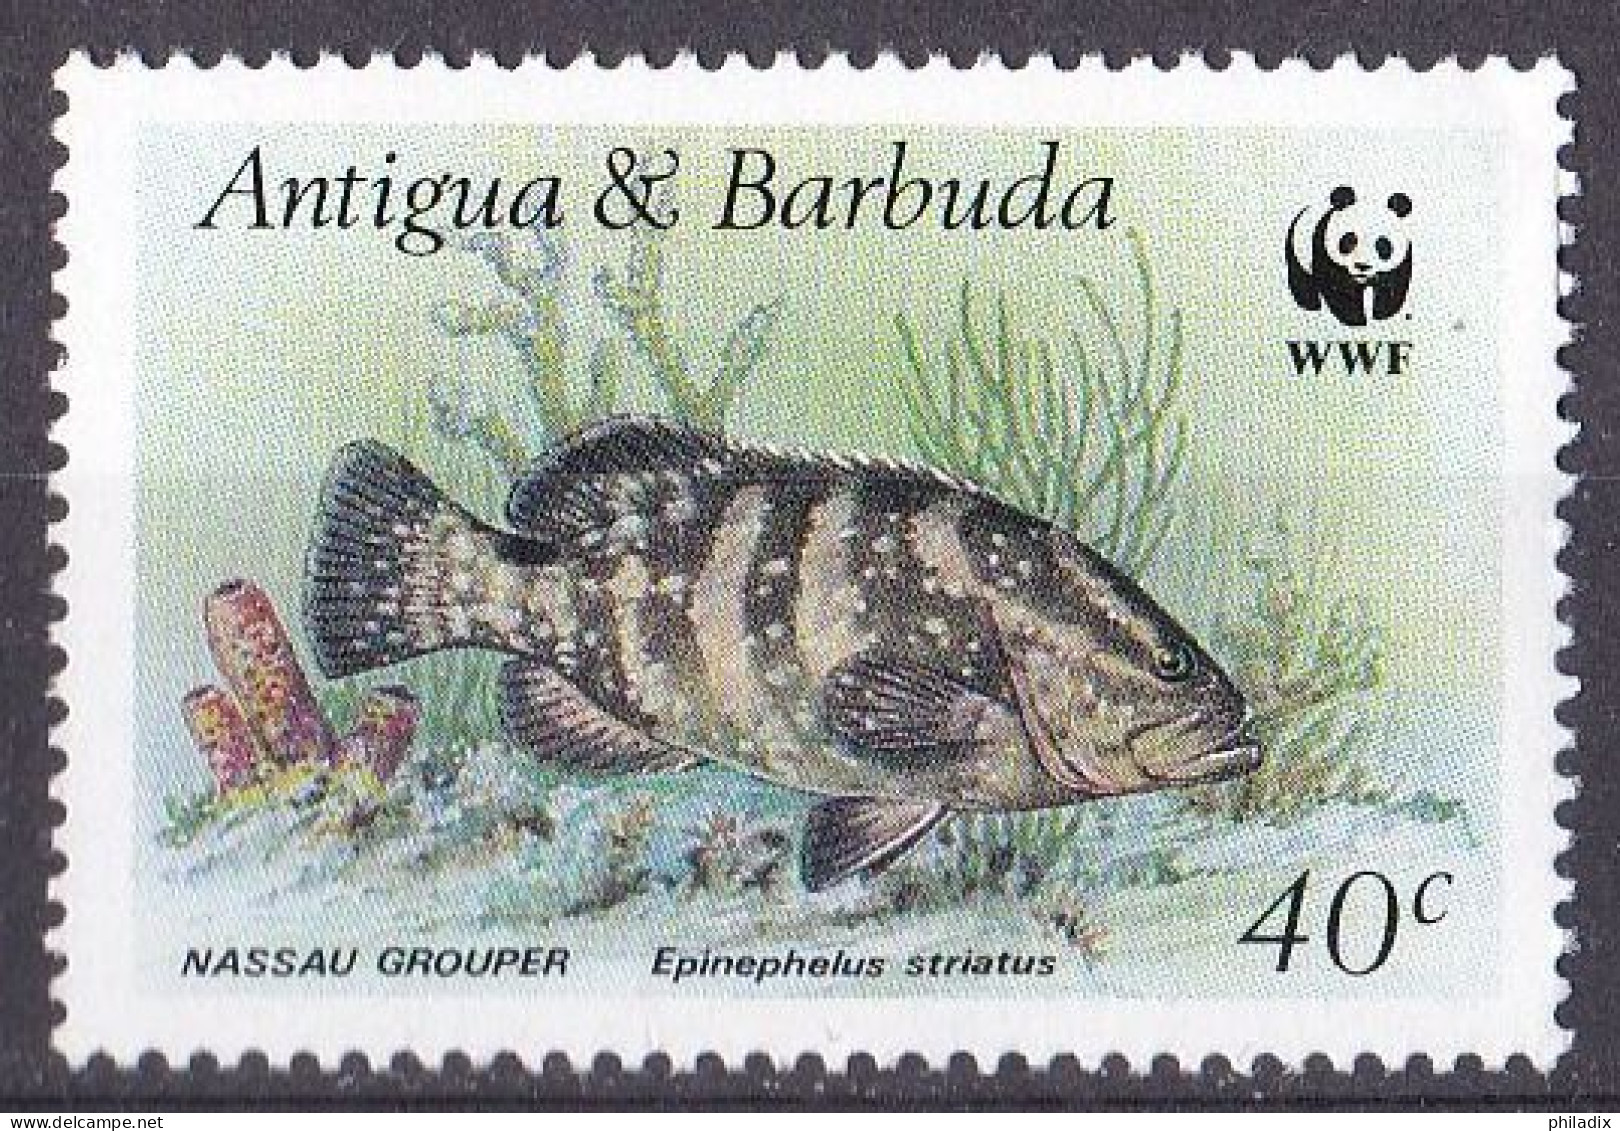 Antigua & Barbuda Marke Von 1987 **/MNH (A5-17) - Antigua Et Barbuda (1981-...)